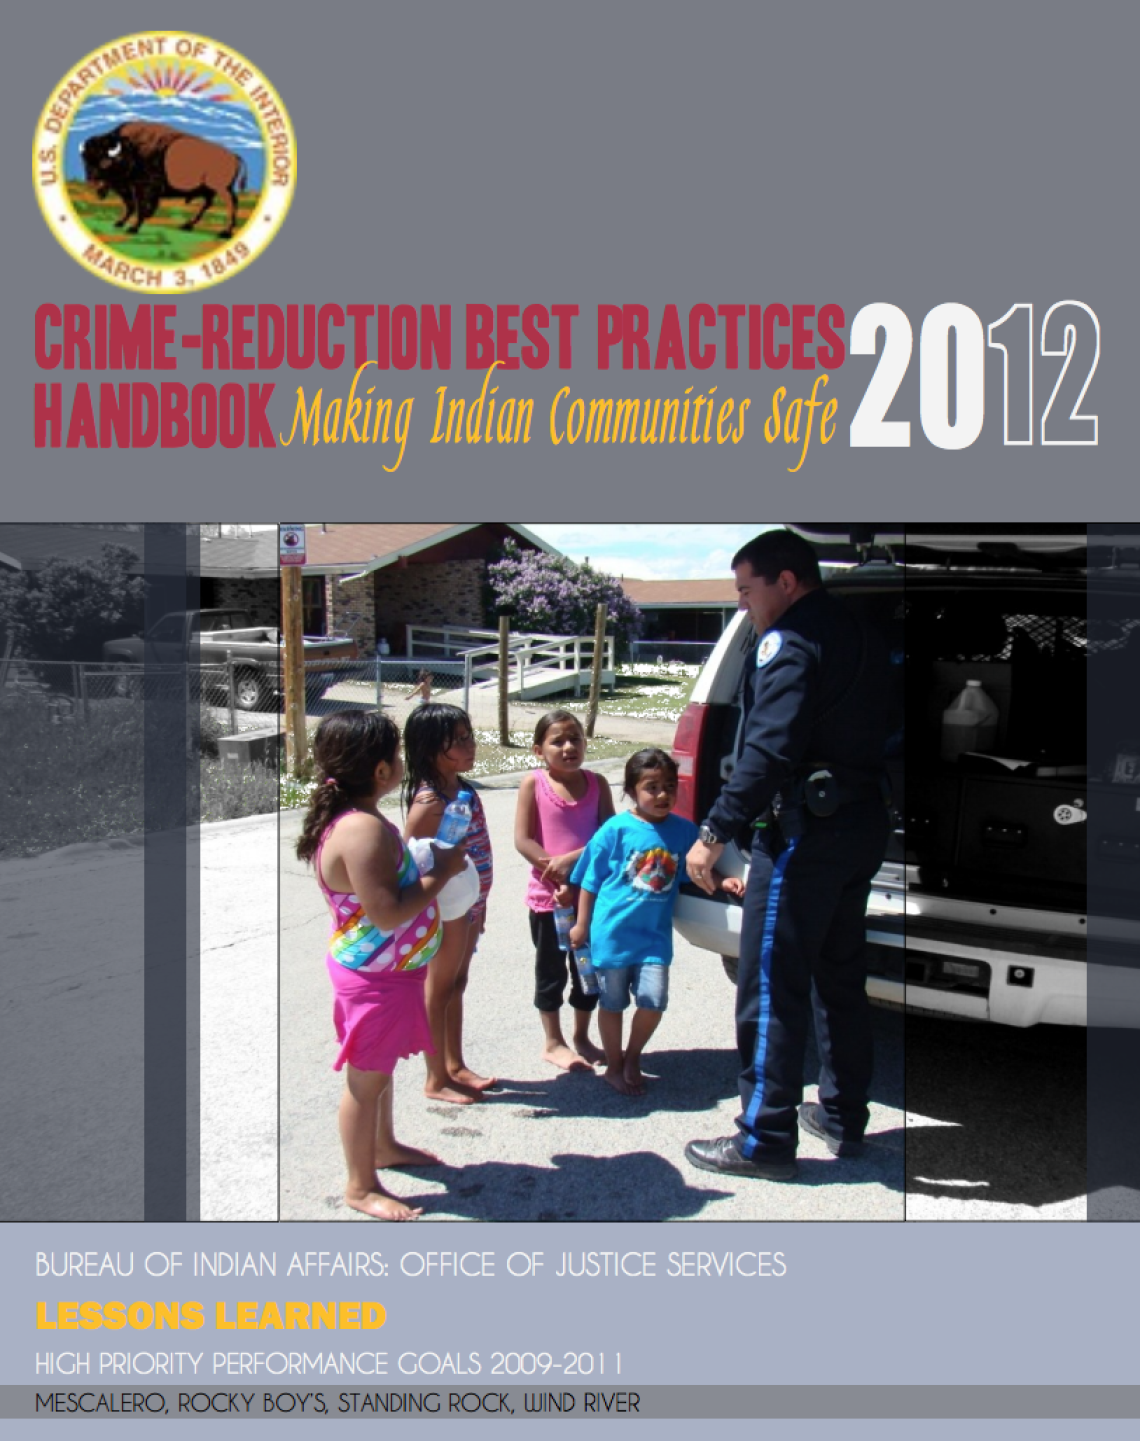 Crime-Reduction Best Practices Handbook: Making Indian Communities Safe